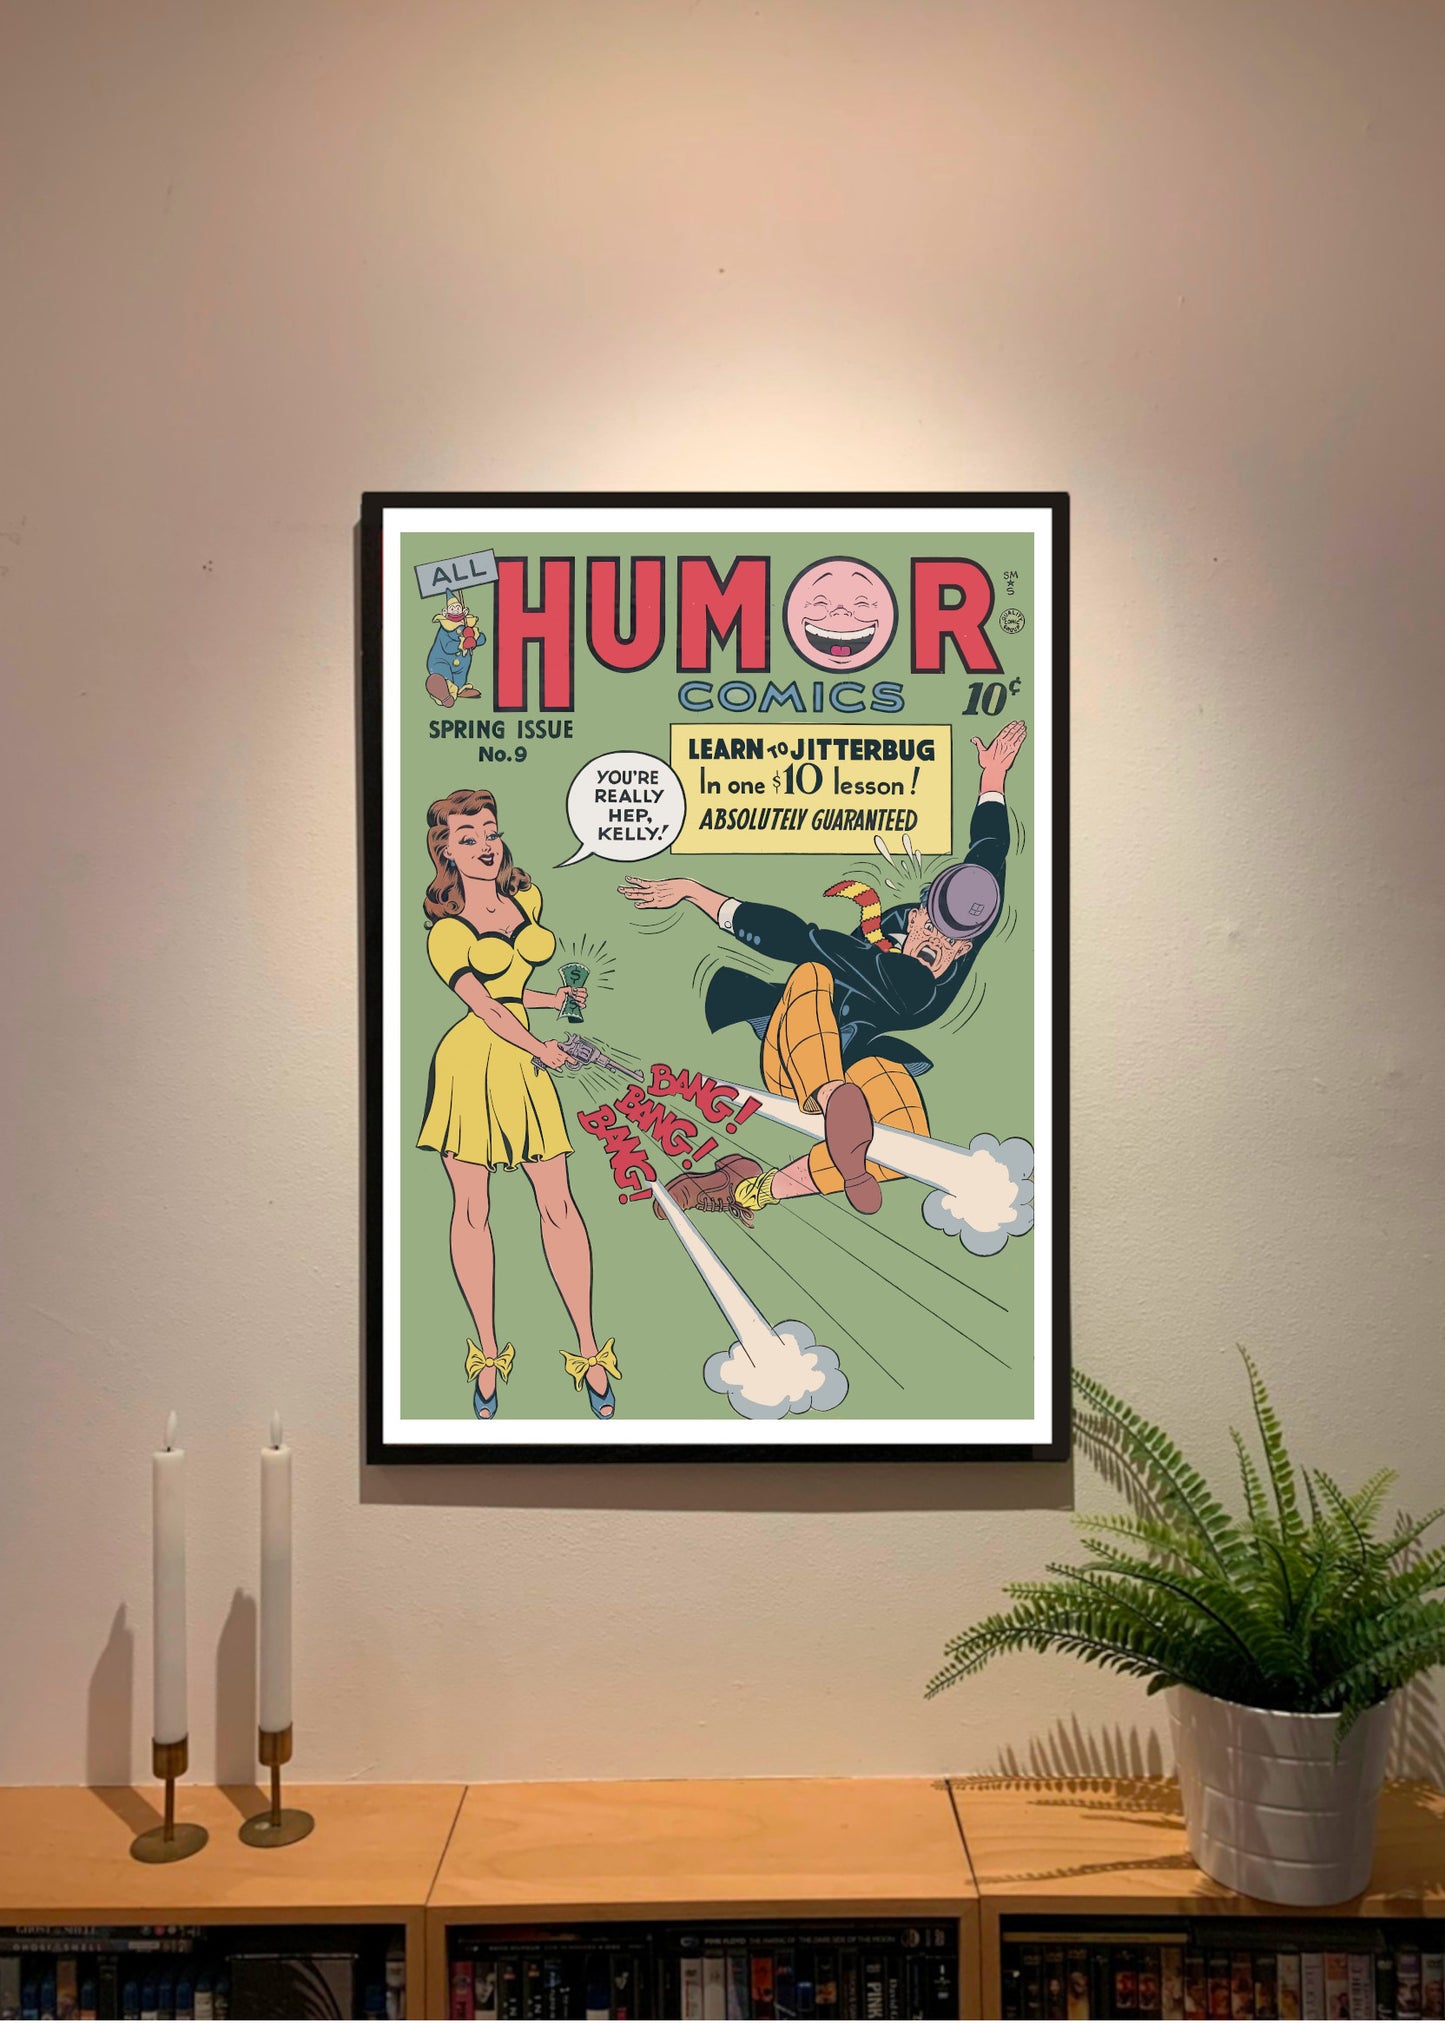 #924 All Humor Comics